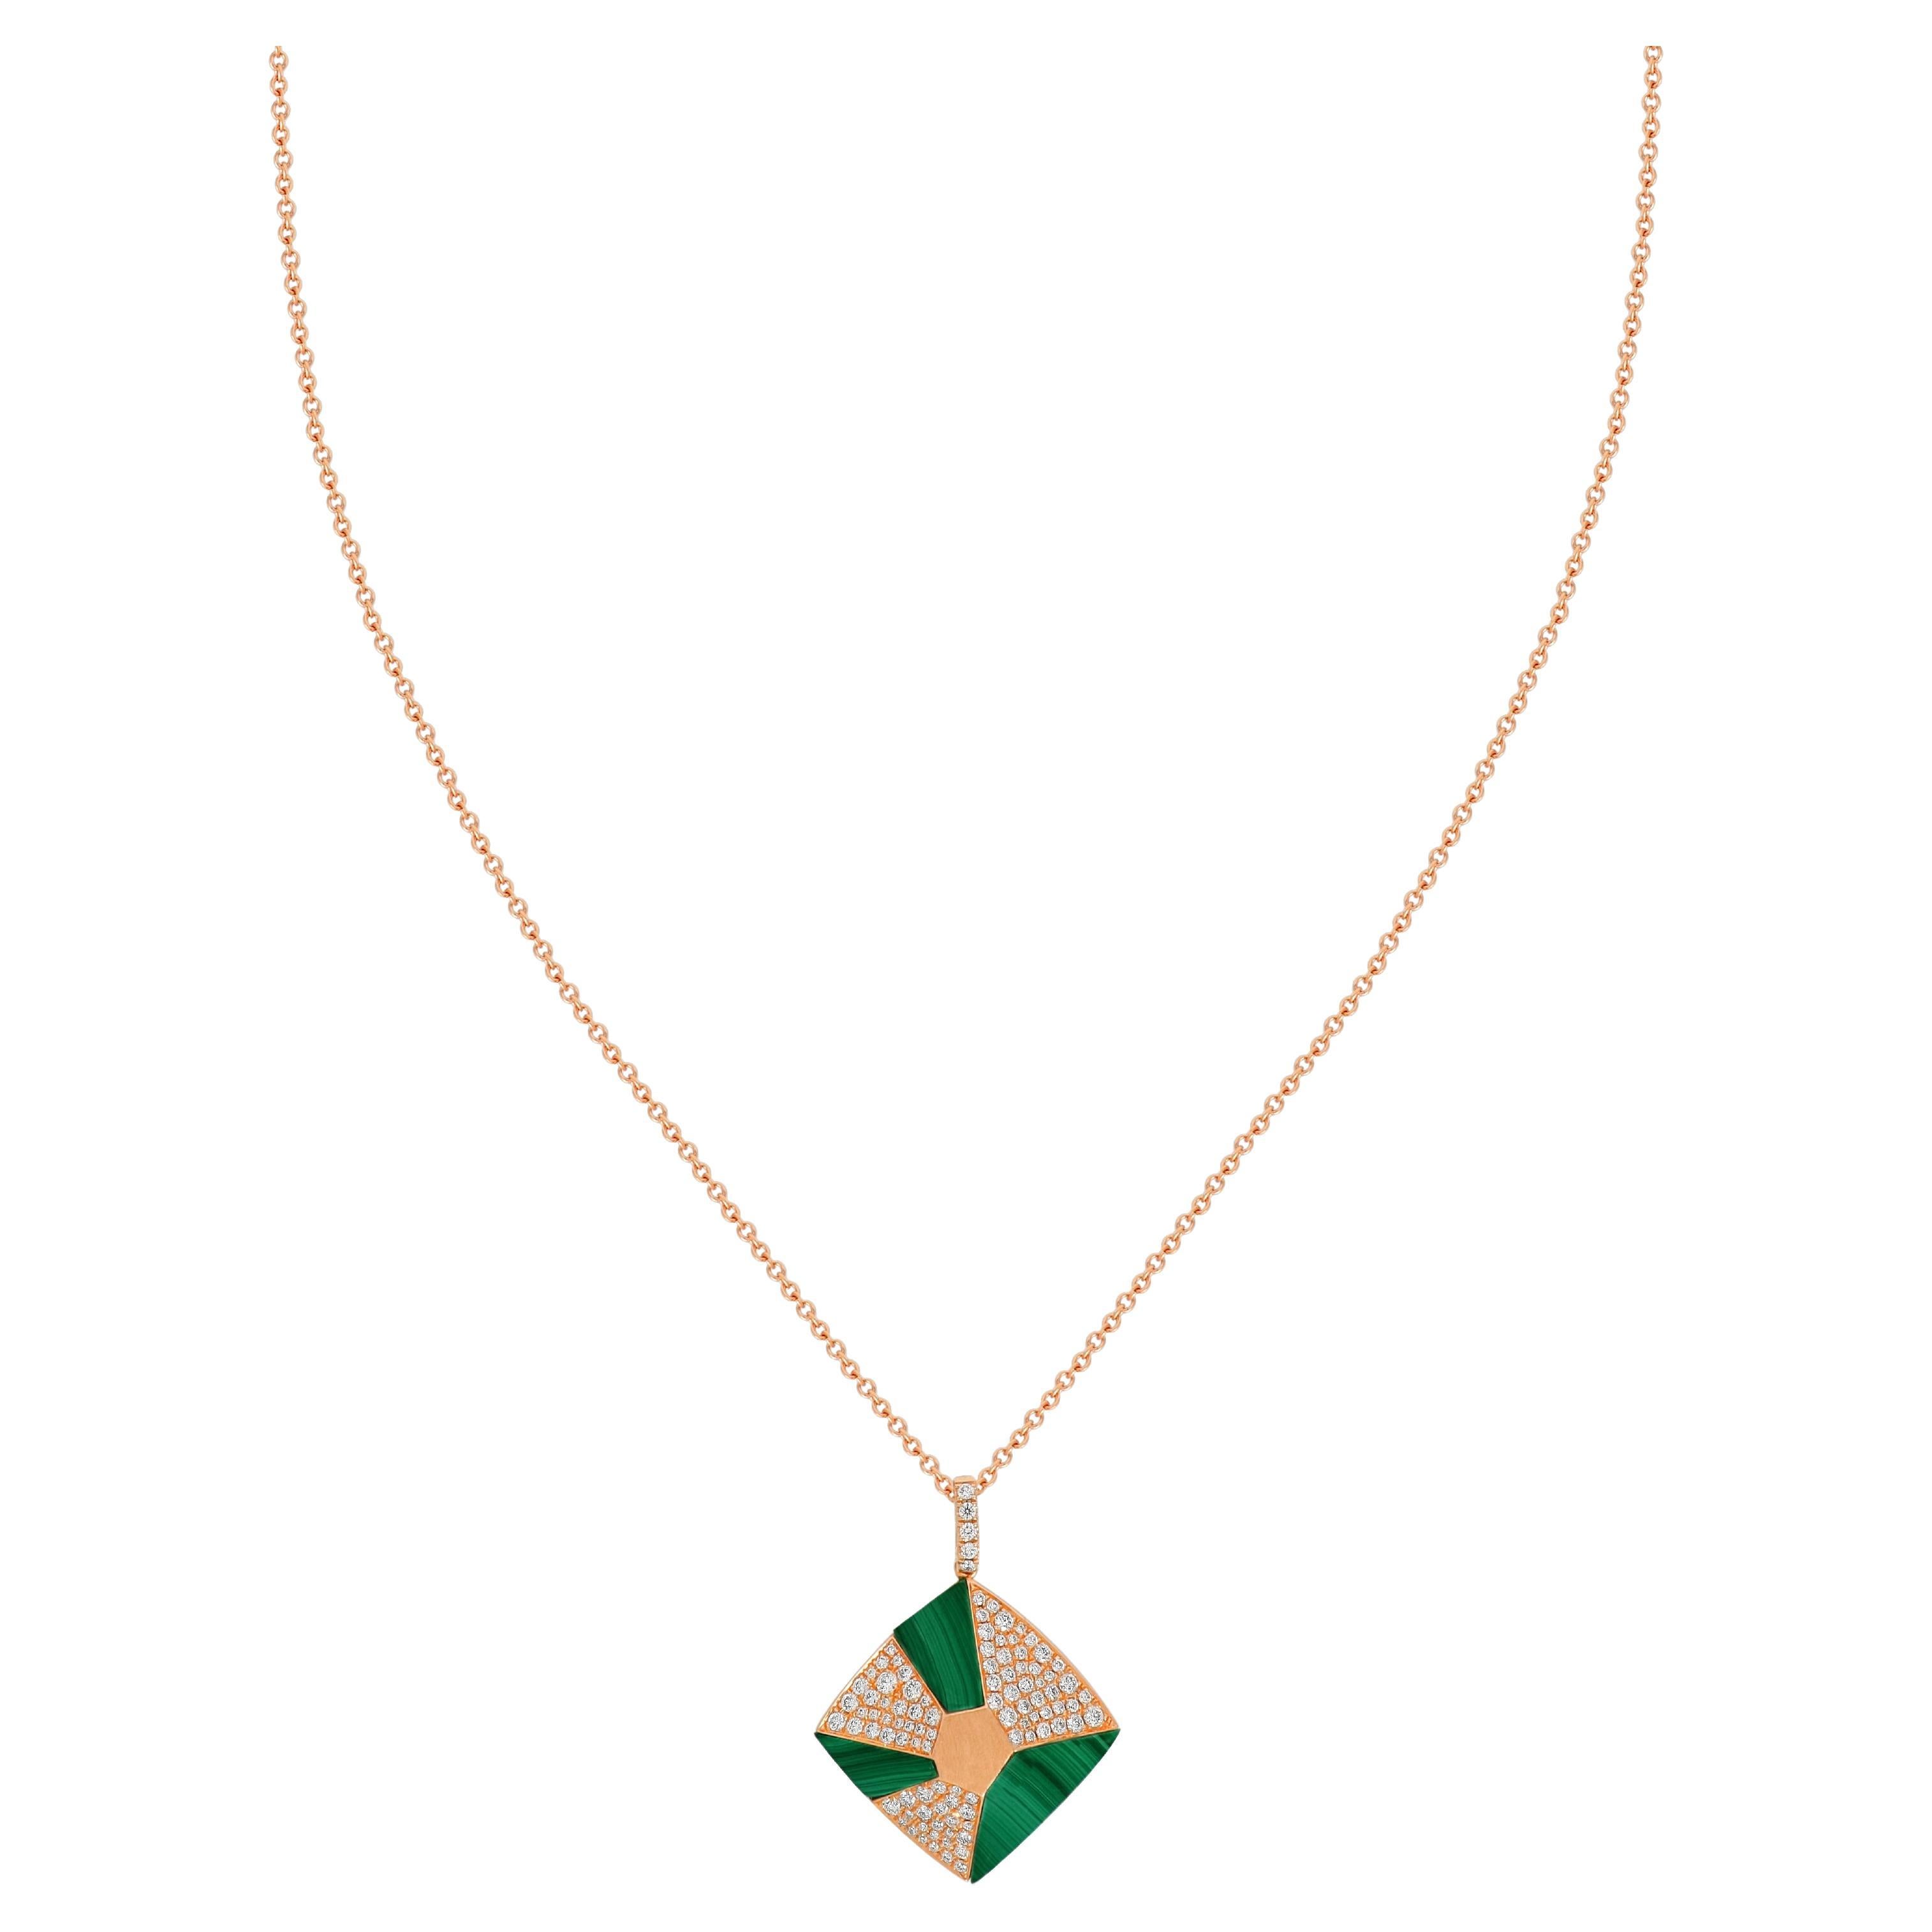 Amwaj Jewellery 18K Rose Gold with Malachite and Brilliant Diamond Necklace